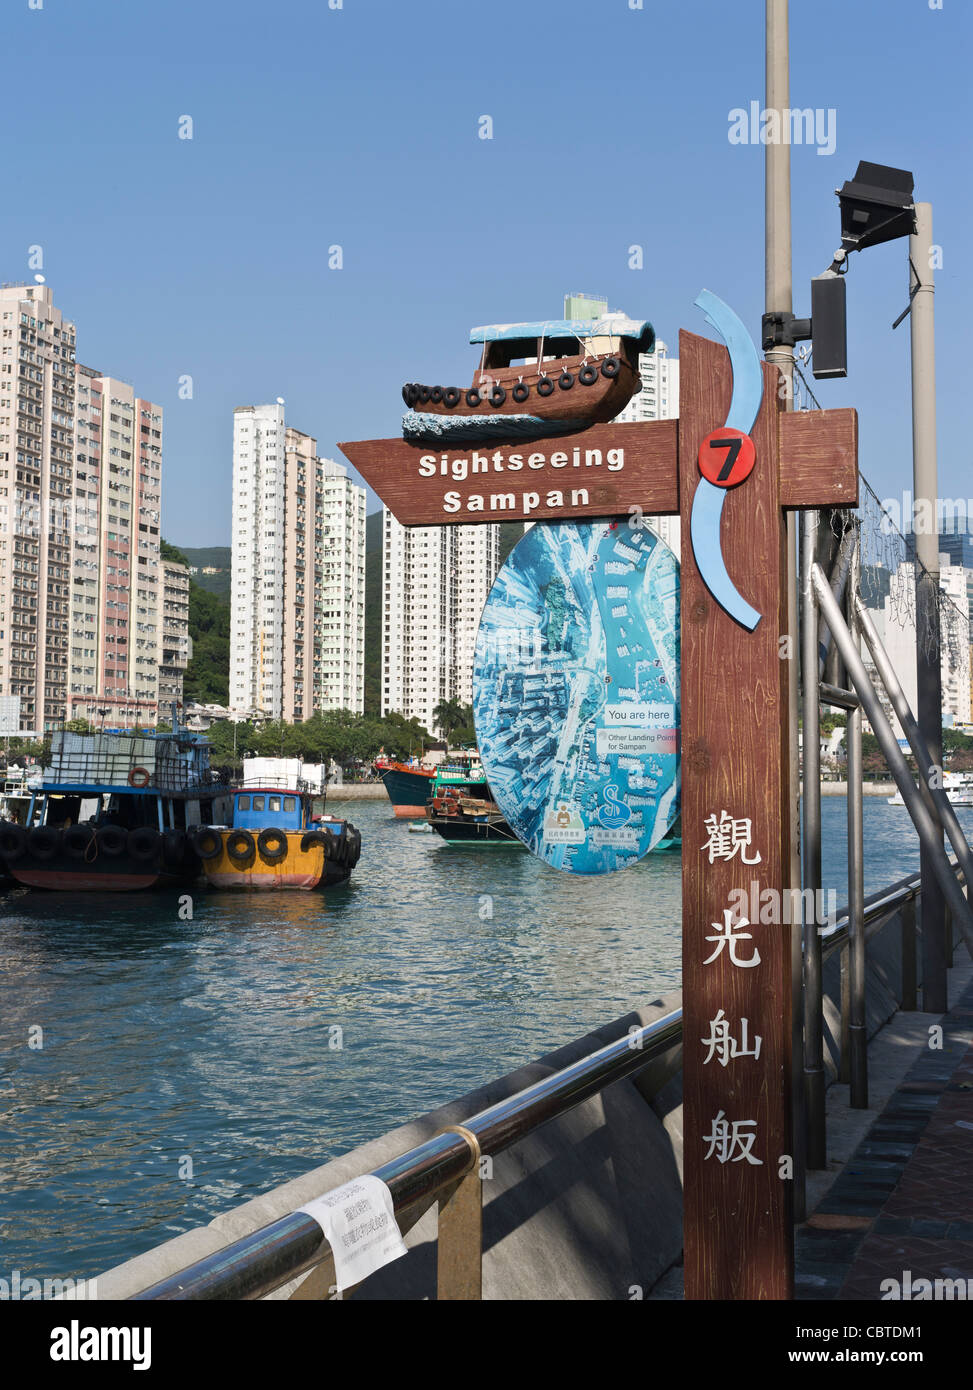 dh Aberdeen Harbour ABERDEEN HONG KONG Sightseeing Sampan sign Ap Lei Chau tourist signs Stock Photo